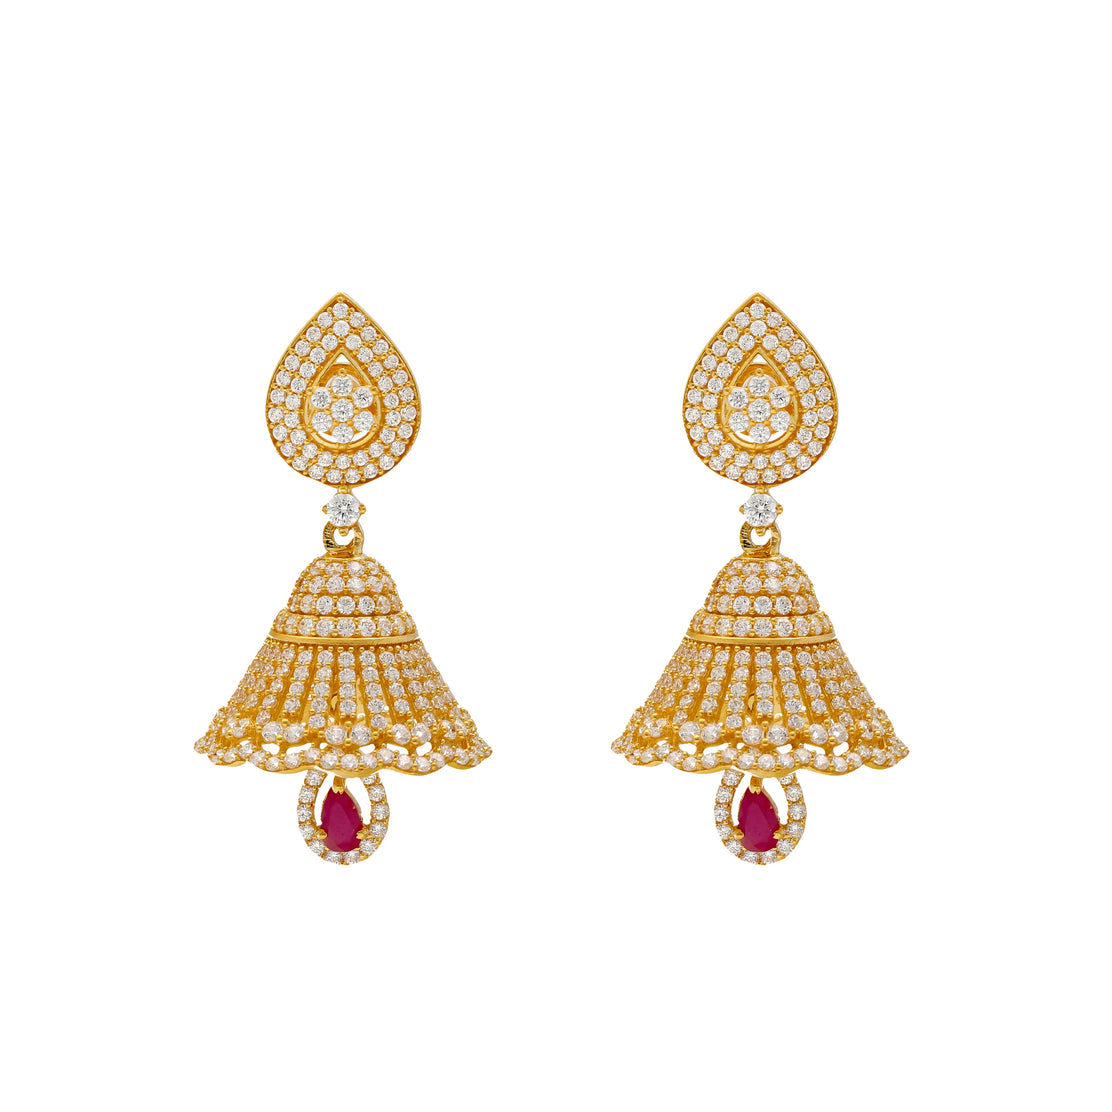 55 Beautiful Gold jhumka earring designs || Tips on Jhumka shopping | Gold  earrings designs, Gold jhumka earrings, Designer earrings